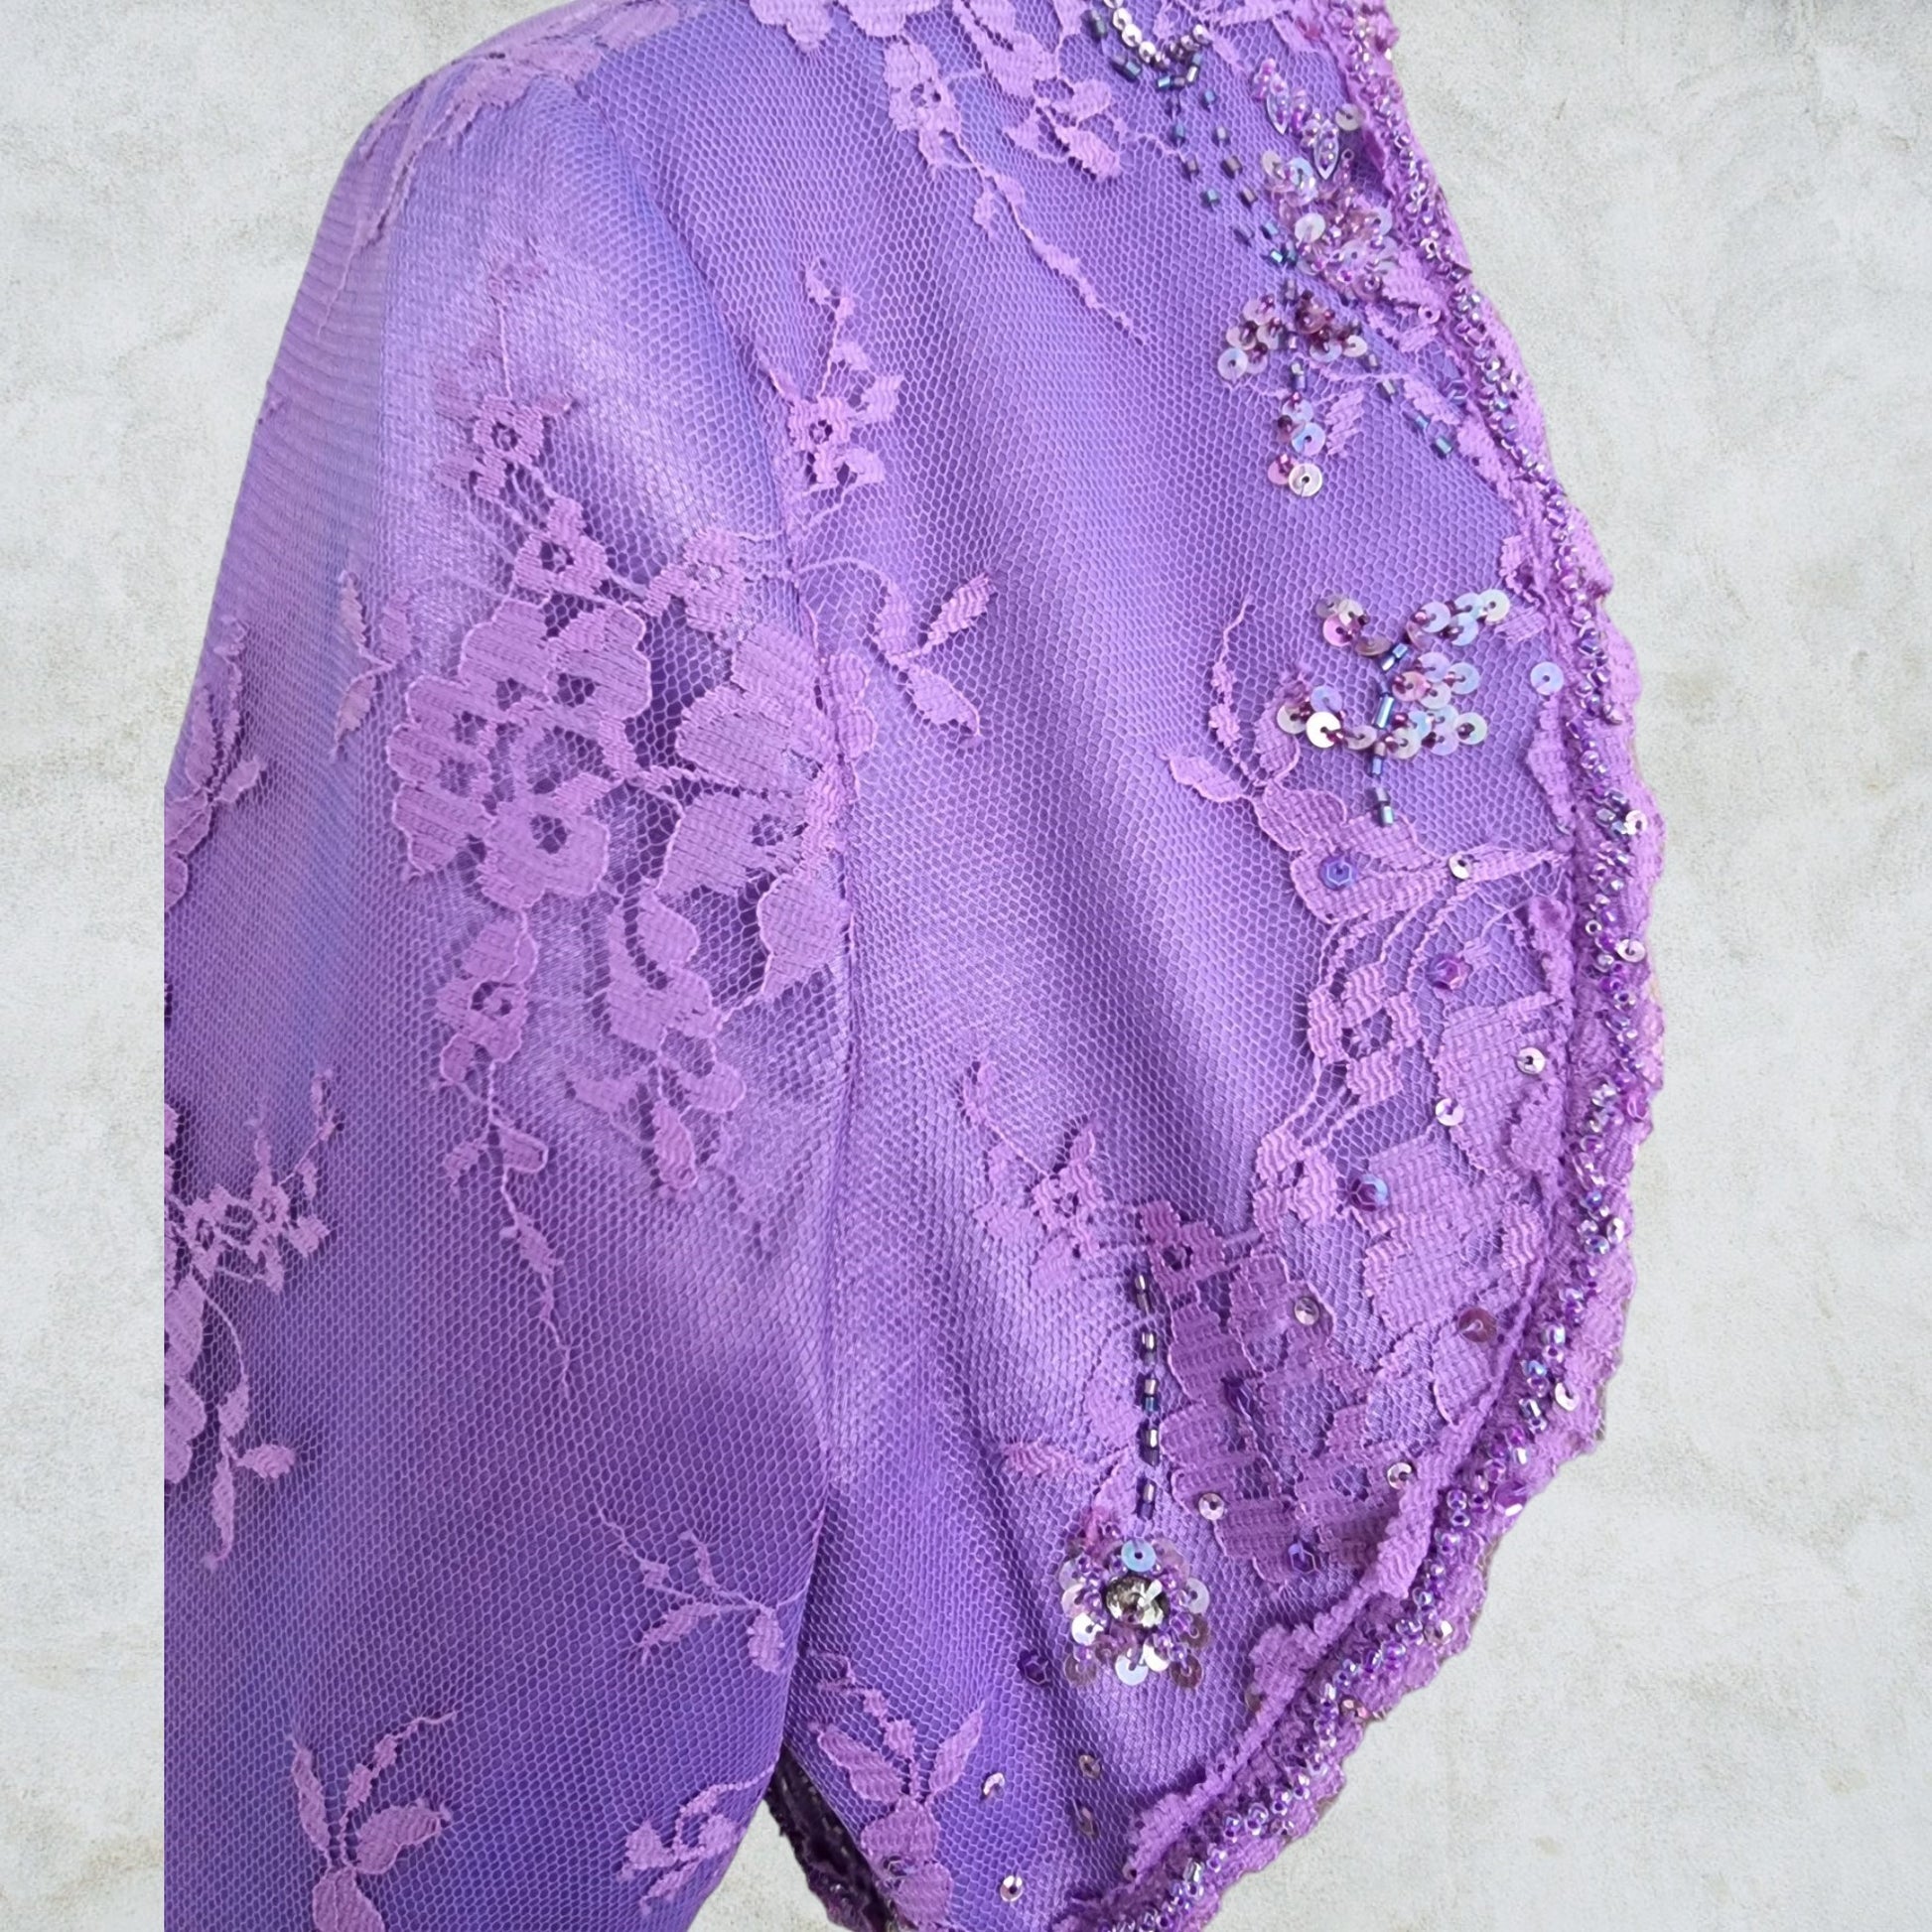 Libra Womens Lilac Embellished Dress & Bolero Jacket UK 14 US 10 EU 42 BNWT Timeless Fashions